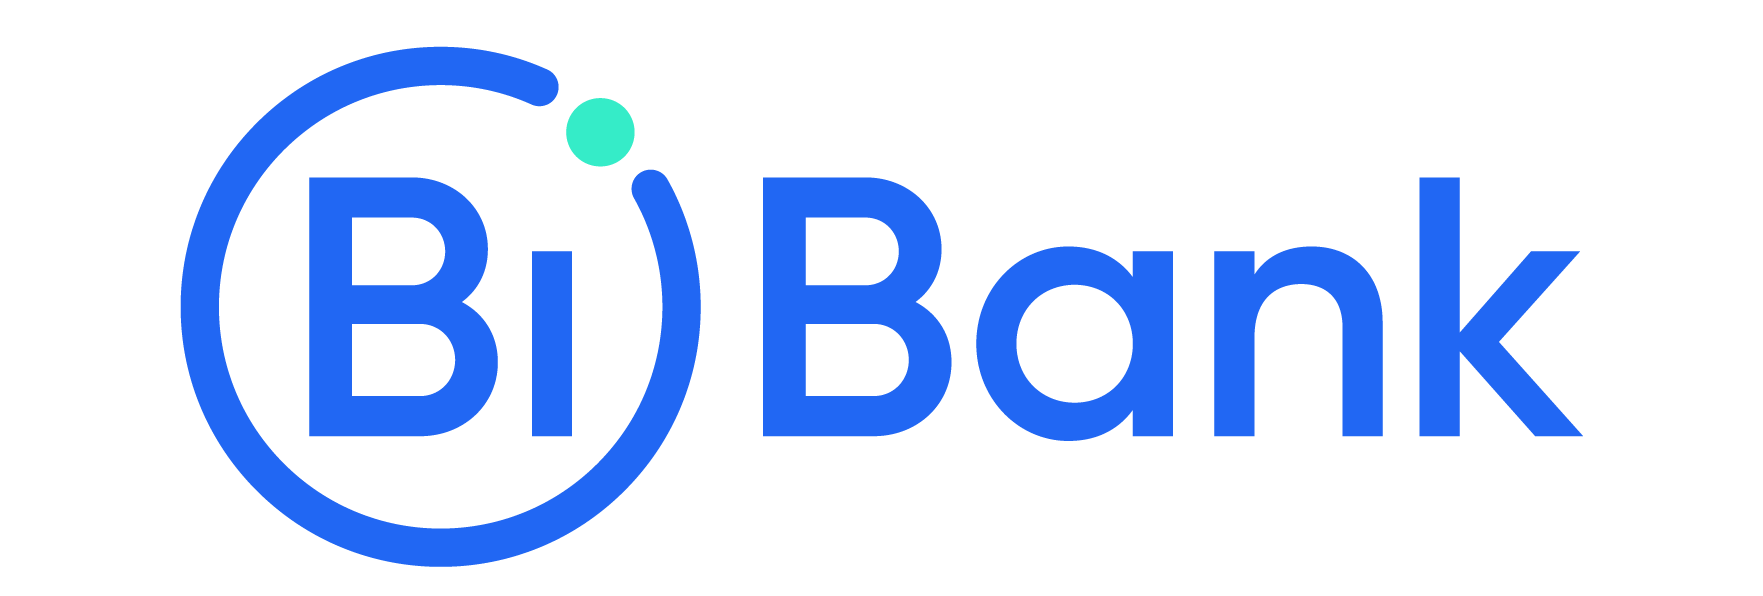 bi bank logo 1